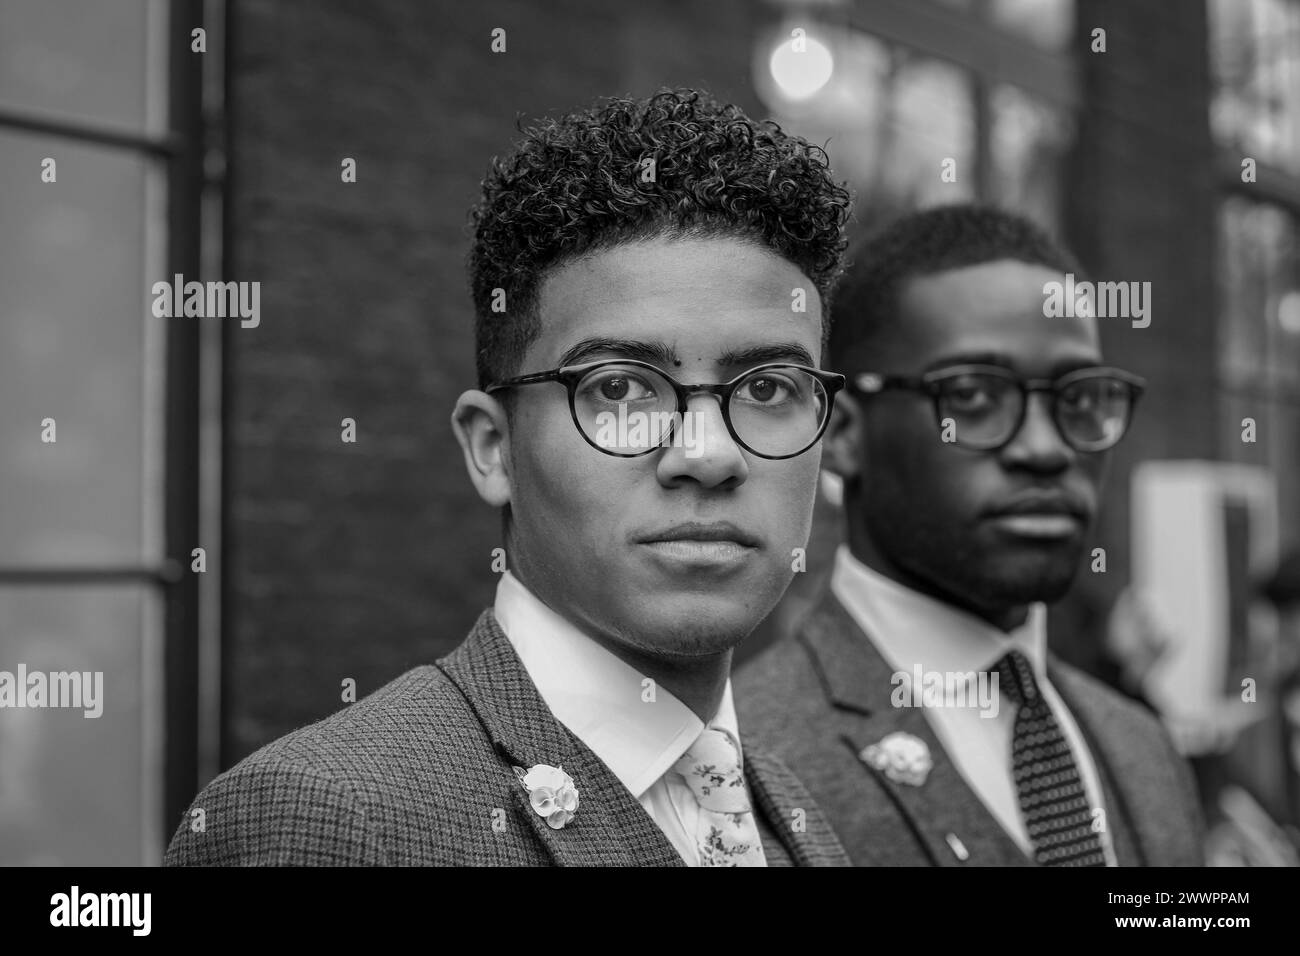 united kingdom london portrait of two teenage black boys wearing suits Stock Photo